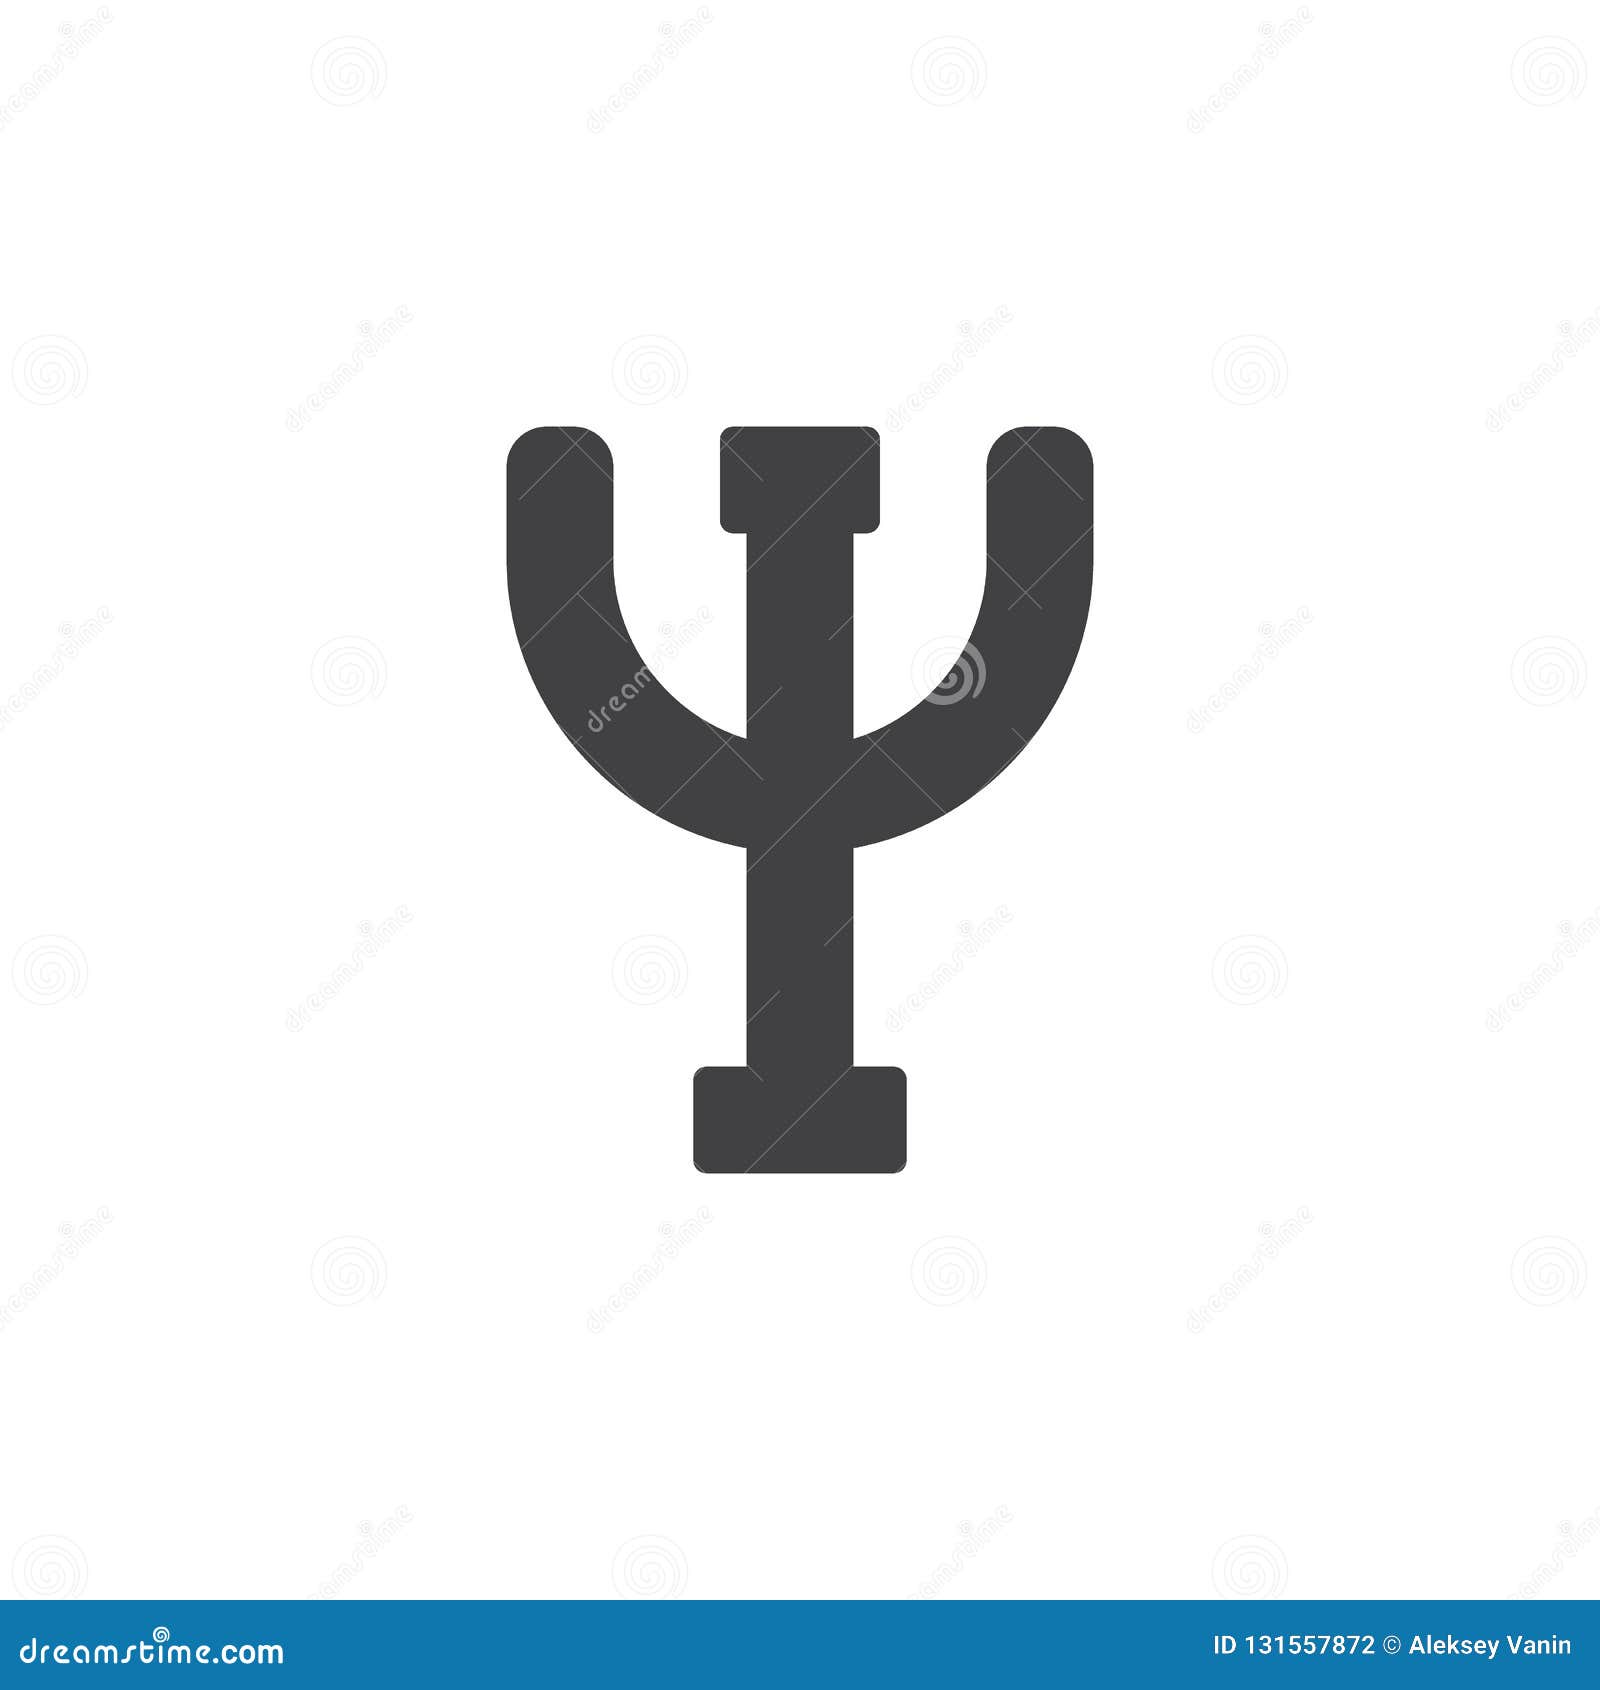 psi letter  icon